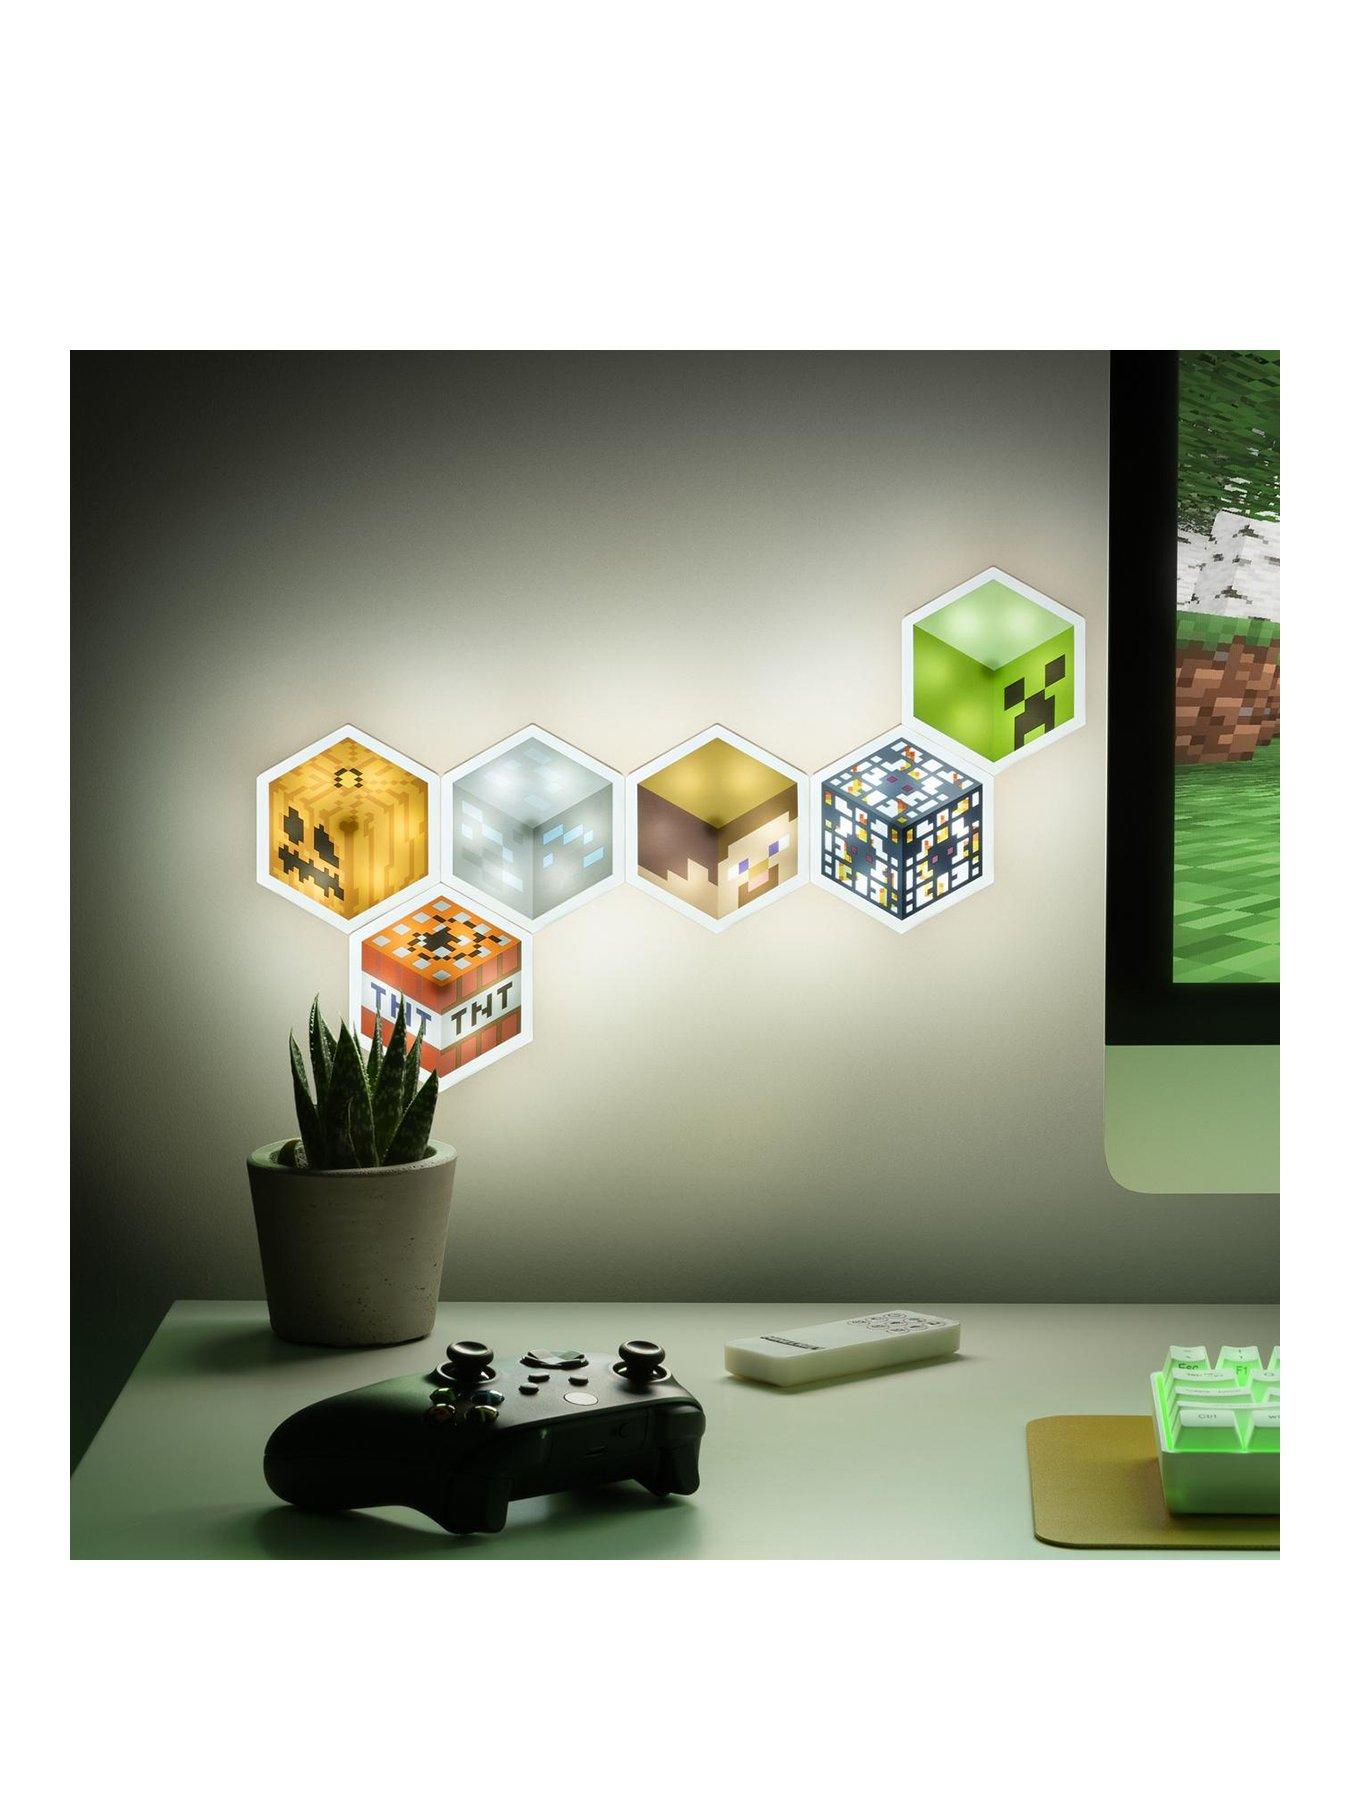 Paladone, 33 cm, Xbox Glitter Flow Lamp, Night Mood Lighting